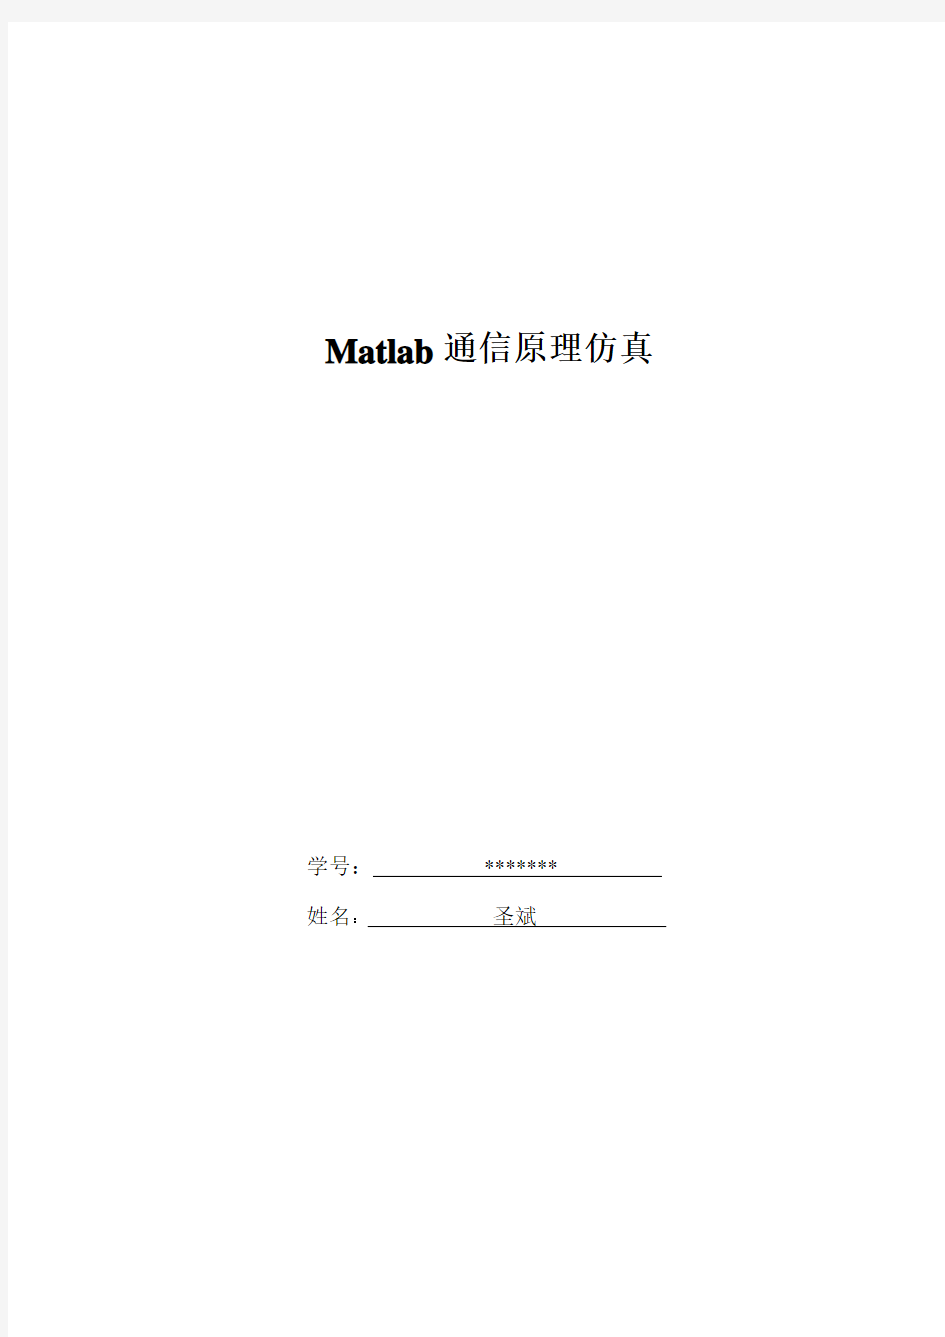 Matlab通信系统仿真实验报告